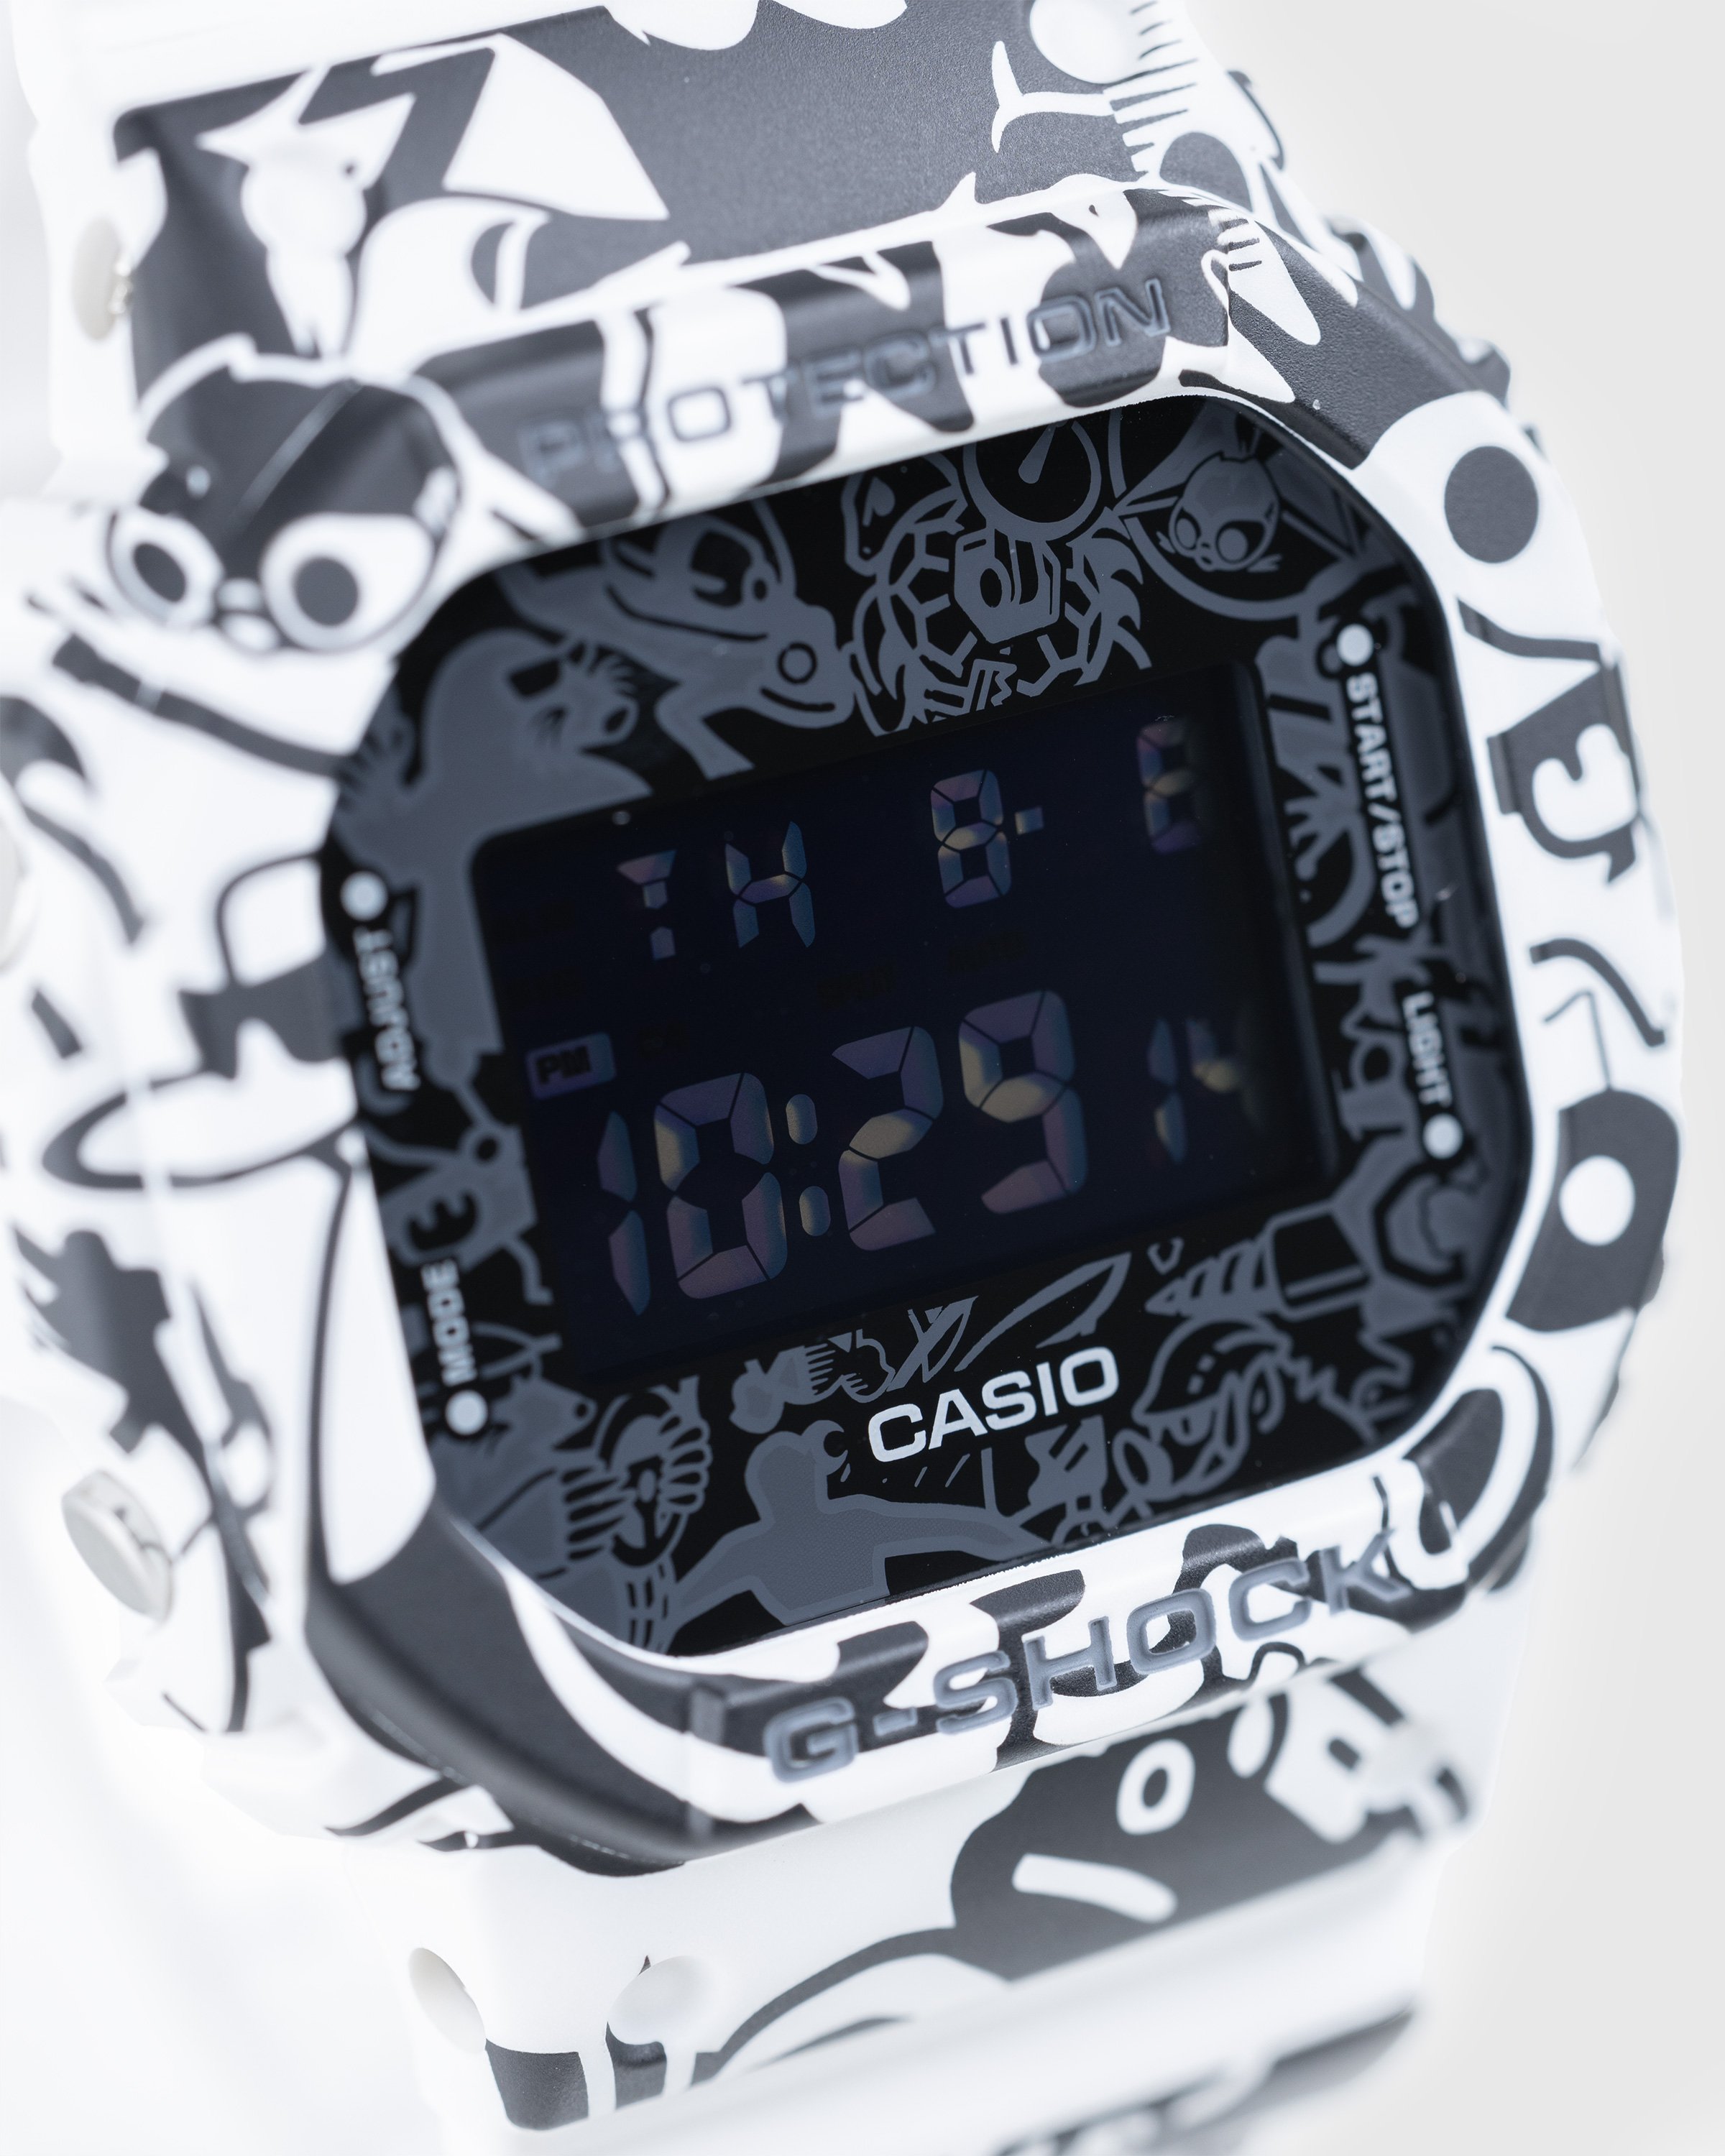 Casio - DW-5600GU-7ER White/Black - Accessories - Multi - Image 3